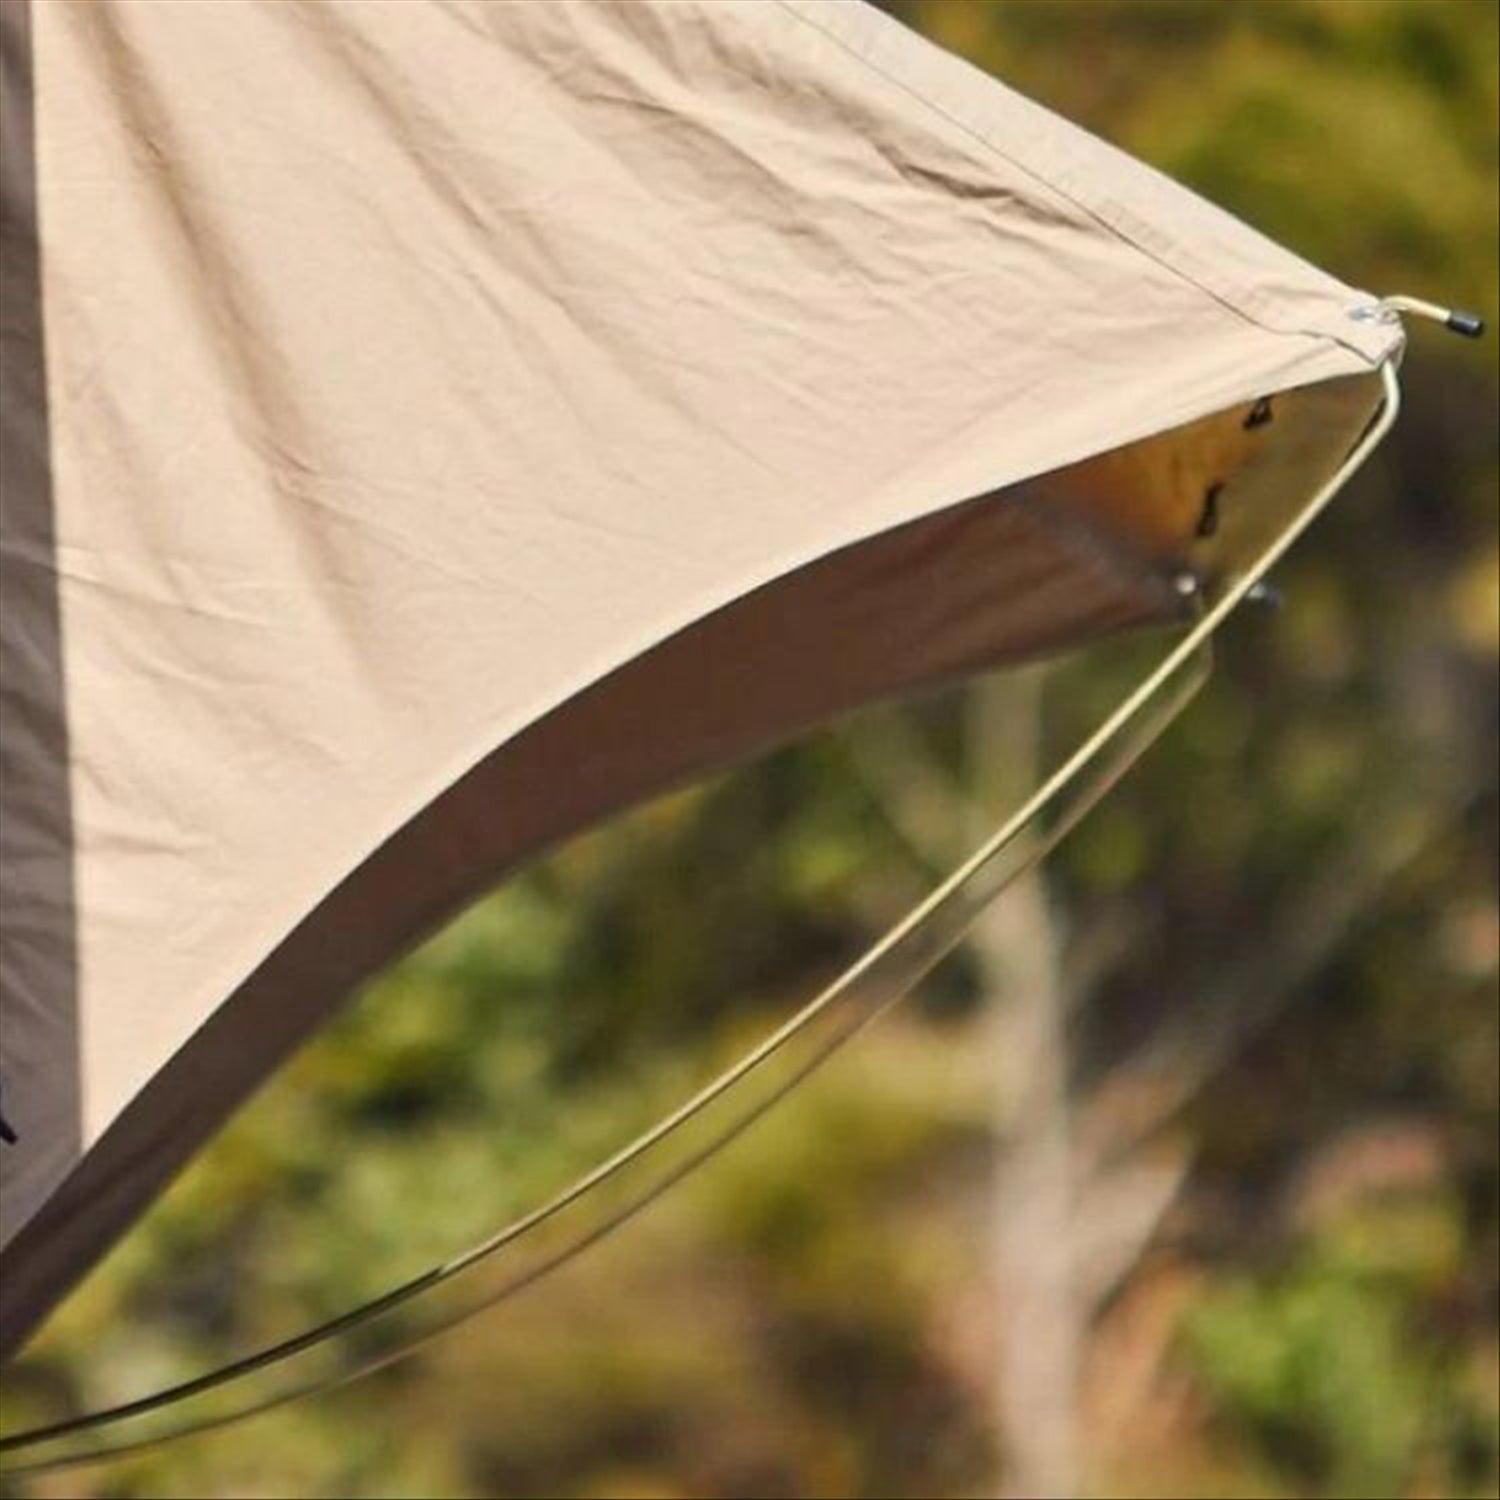 Orson Roof Top Tent Window Poles / Fly Poles Set